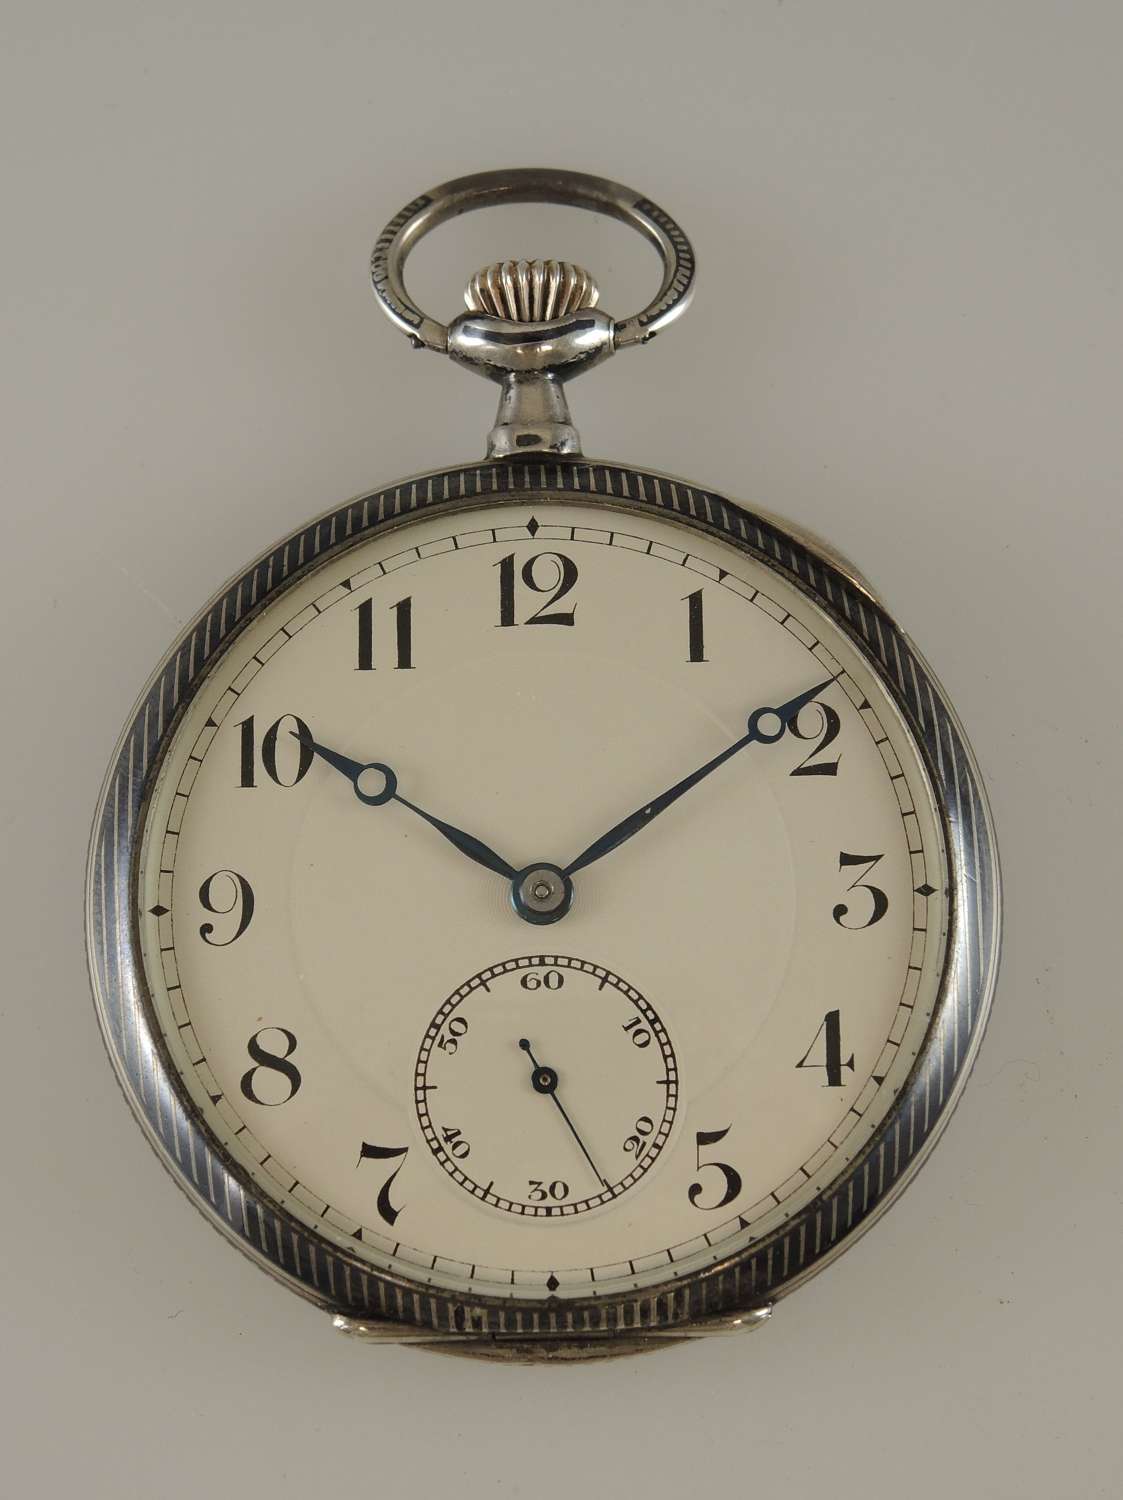 Silver and niello enamel pocket watch by Tavannes c1920